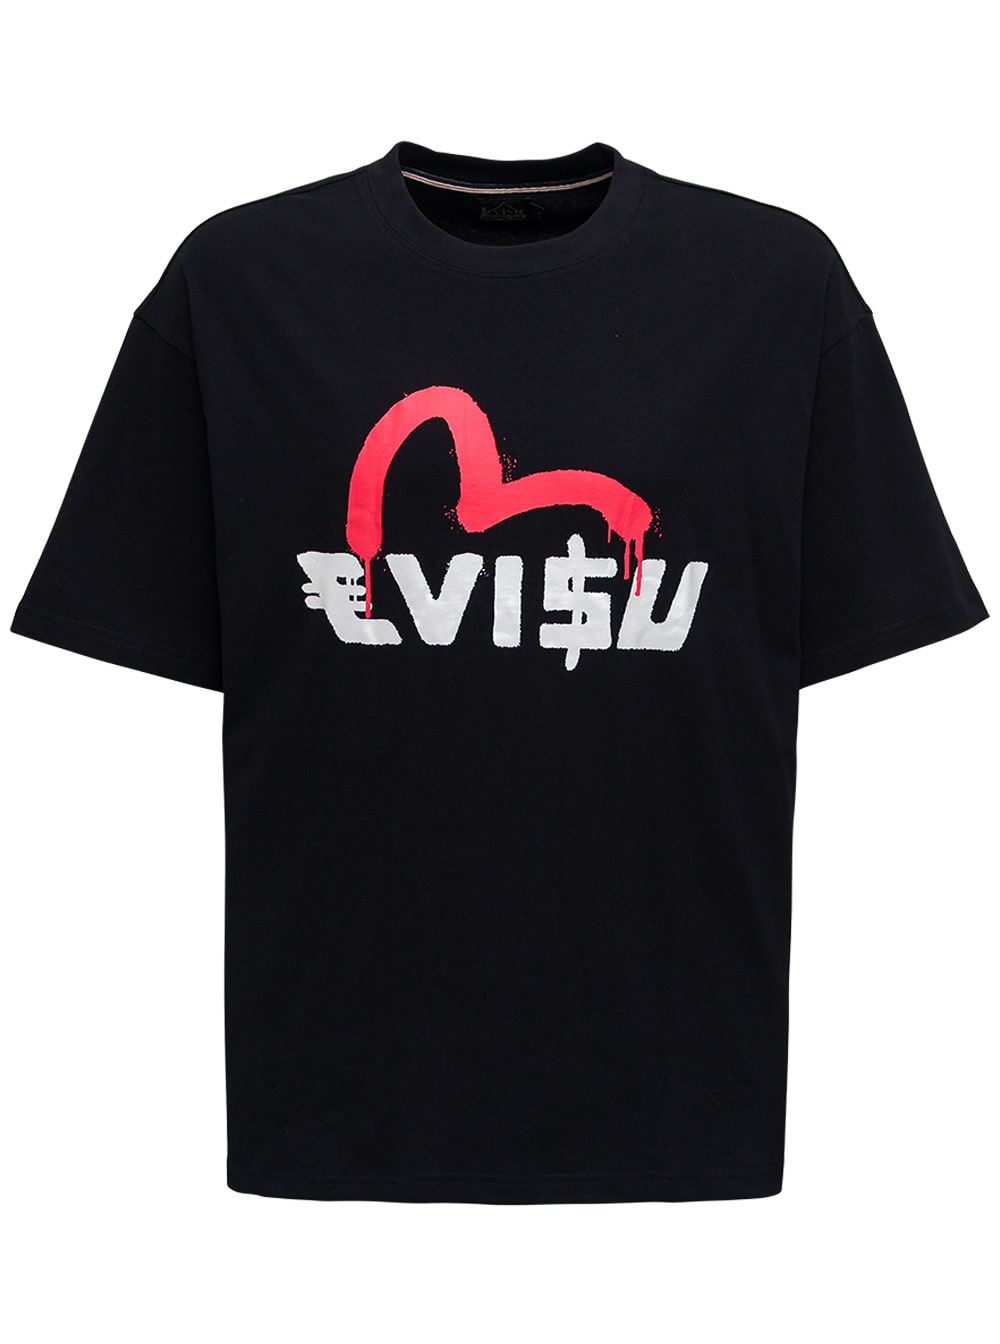 Evisu Evisu X Sfera Ebbasta Black Jersey T-shirt